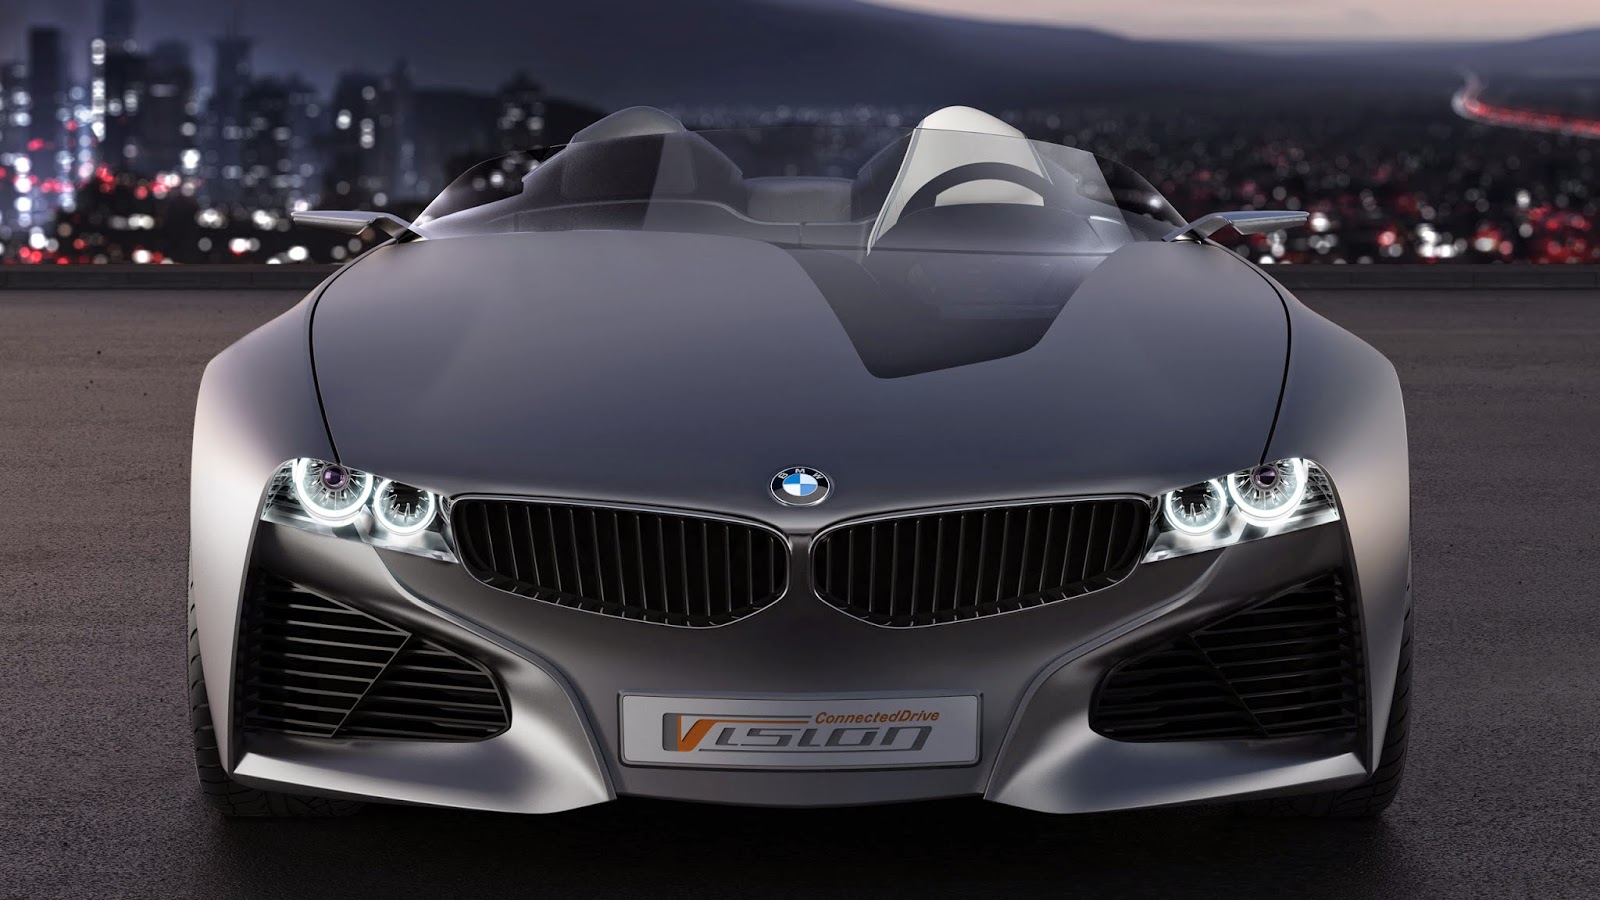 Wallpaper Mobil Mewah BMW Vision Future Luxury Car